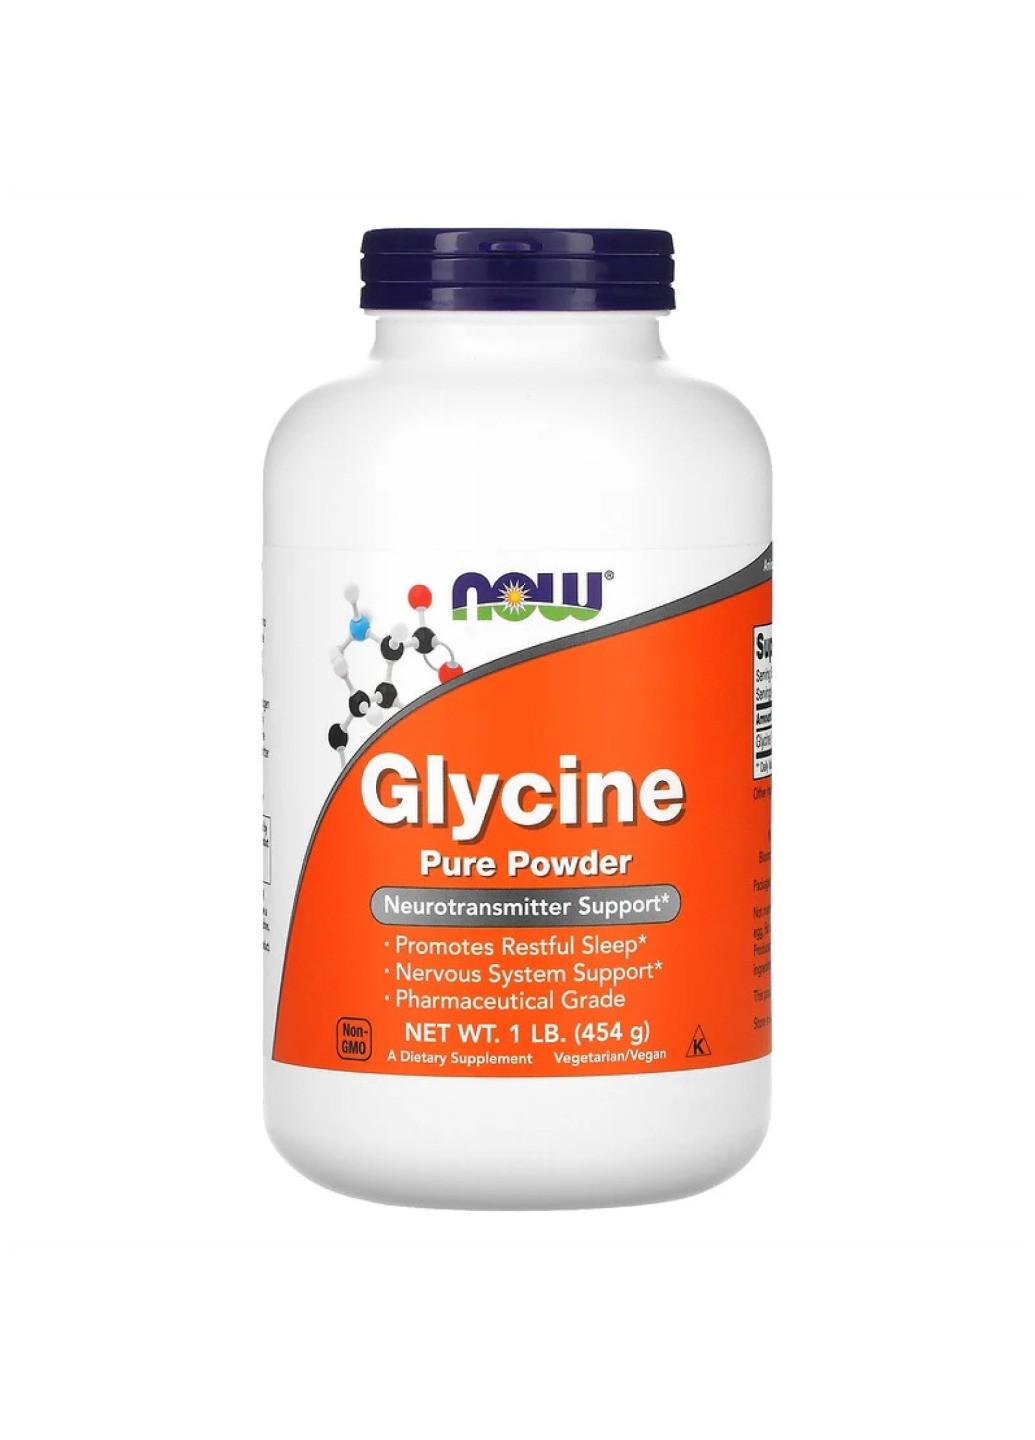 Глицин Glycine Pure Powder - 454g (1lb) Now Foods (273182908)